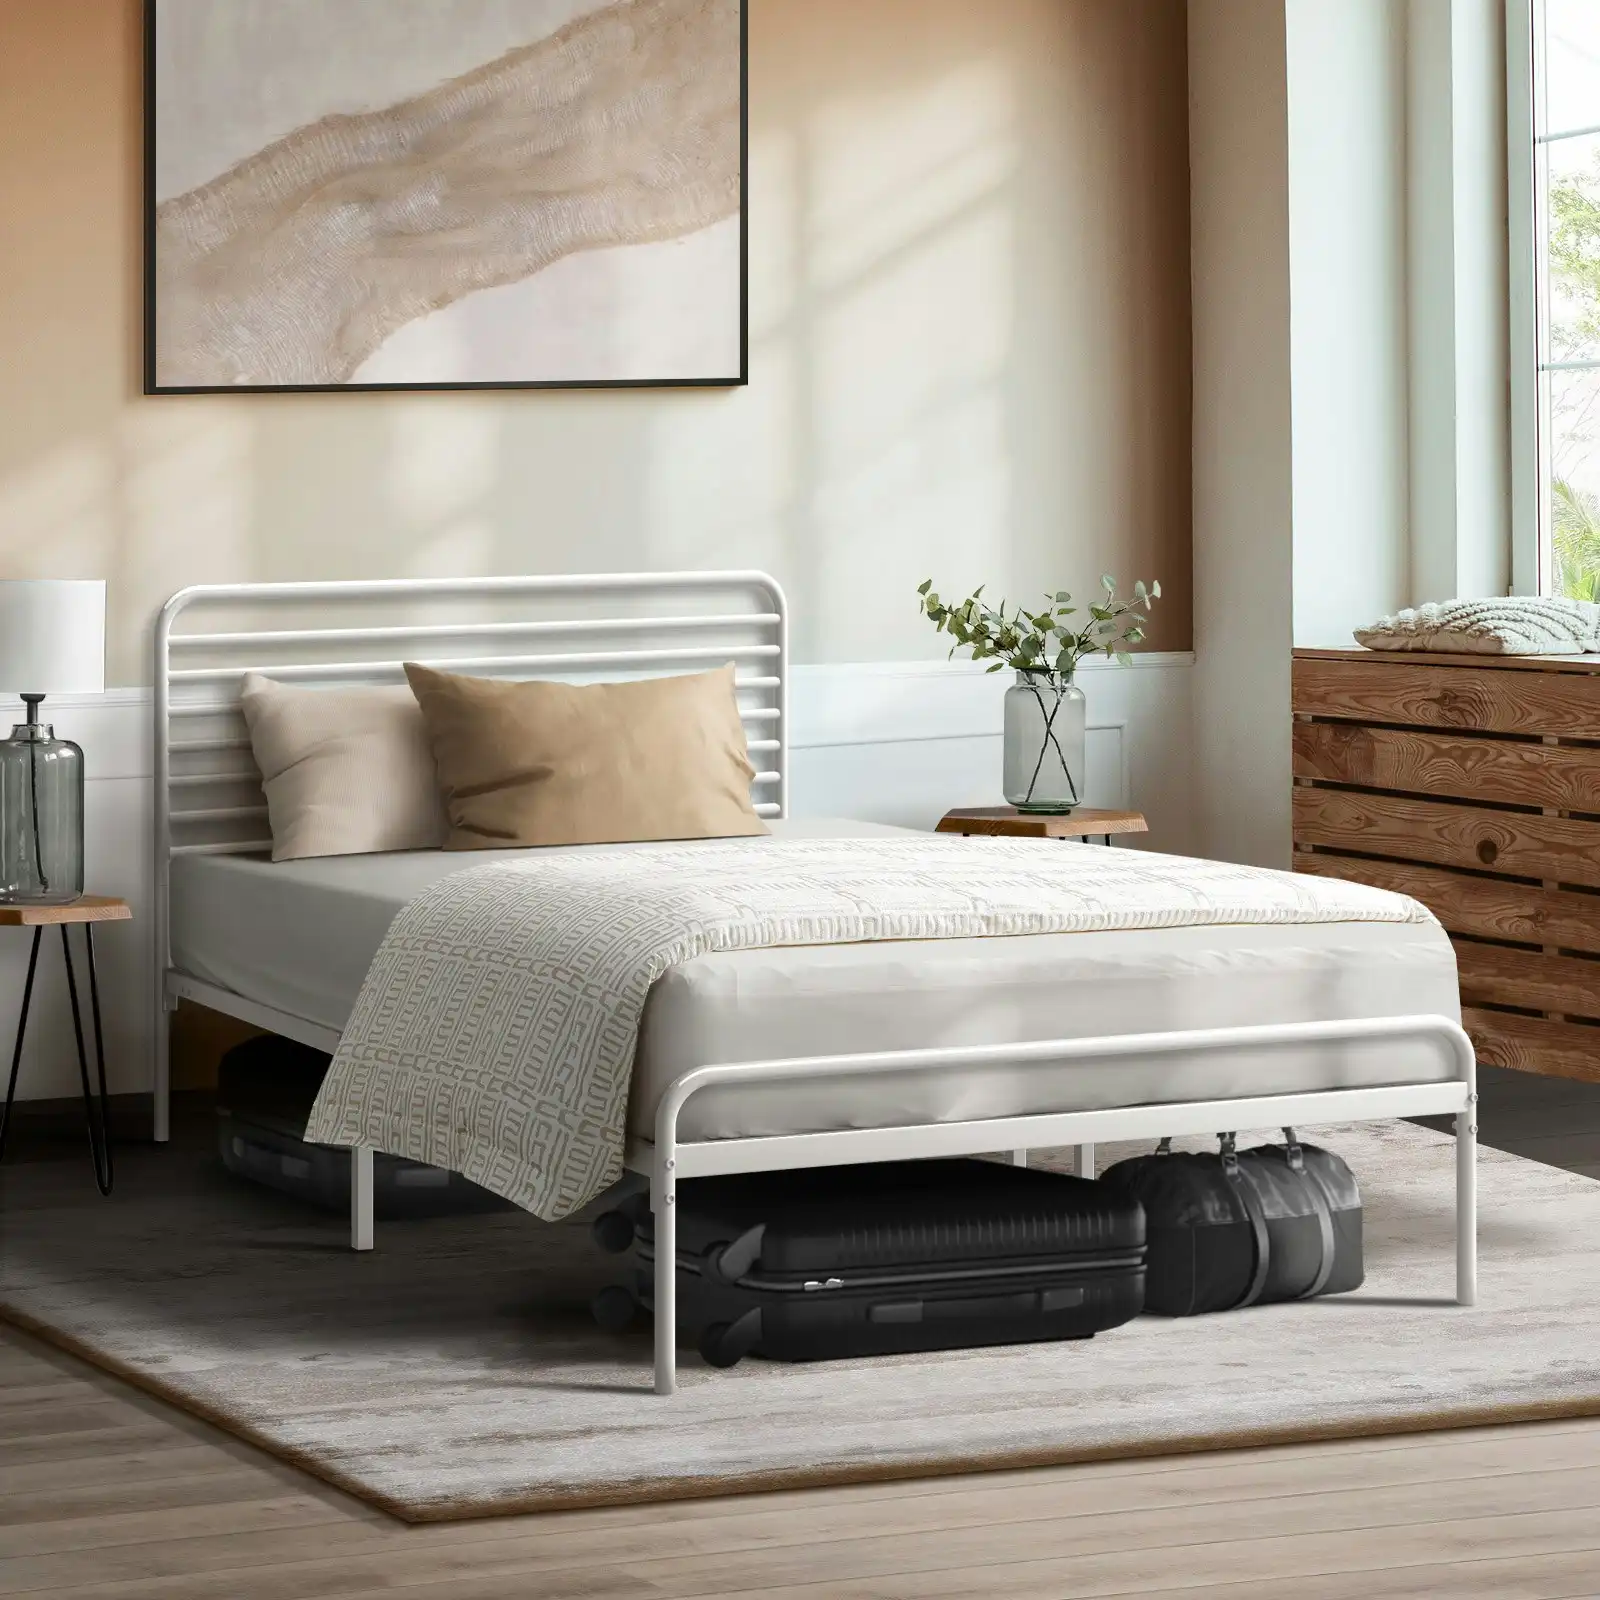 Oikiture Metal Bed Frame King Single Bed Base Beds Platform White